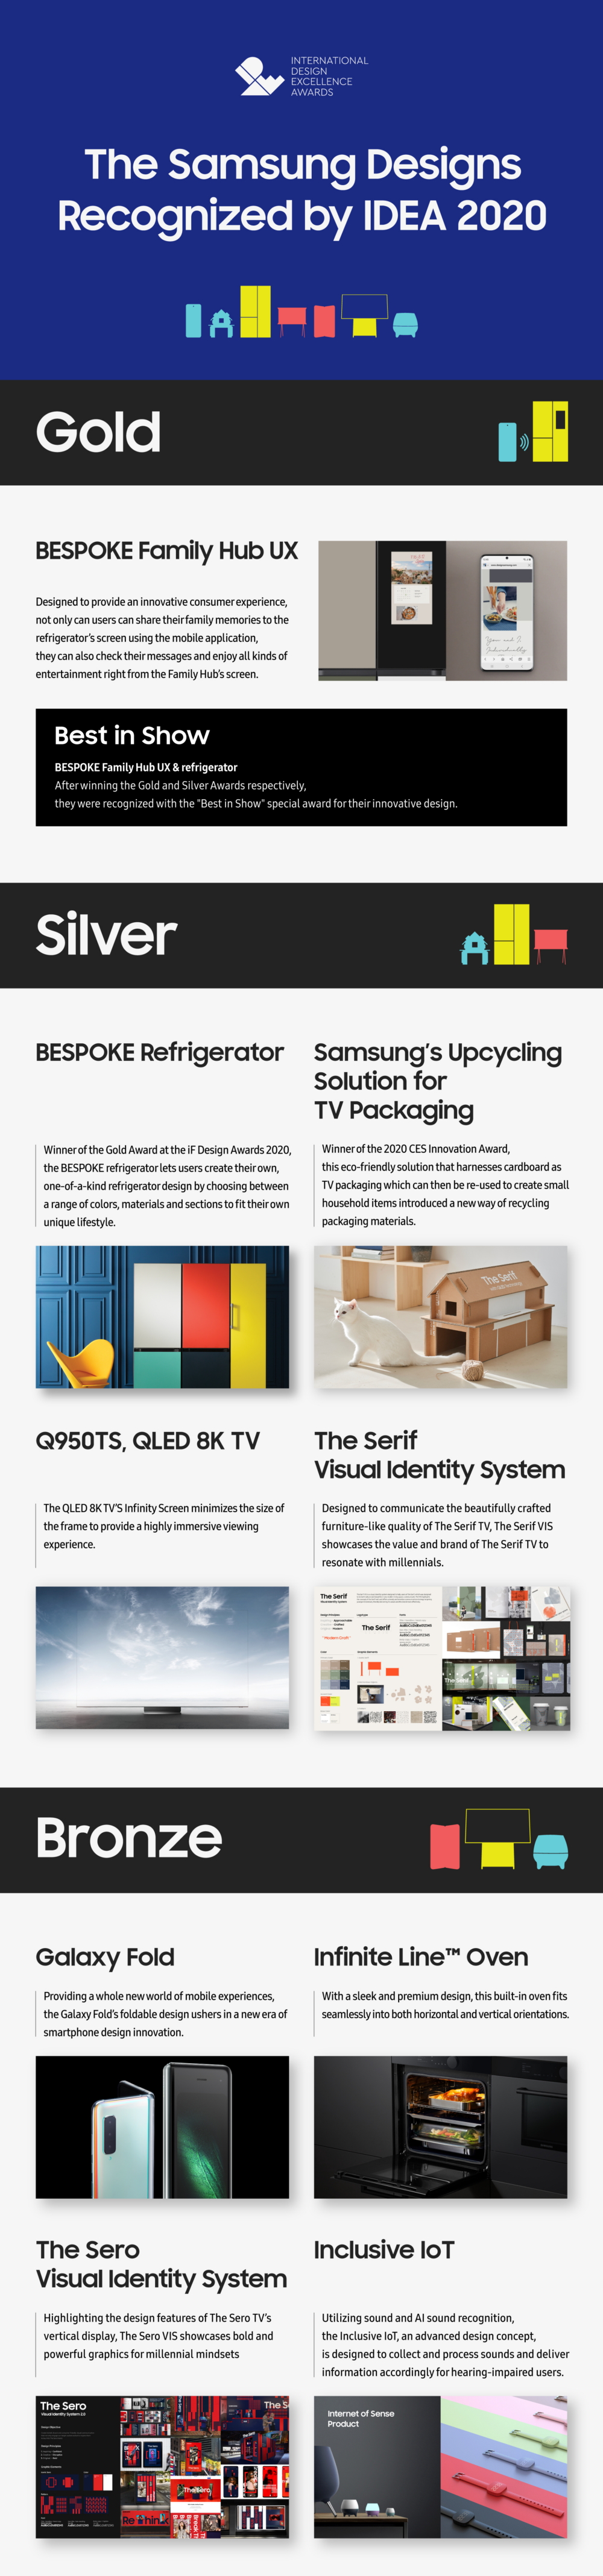 Samsung IDEA 2020 Awards Infographic